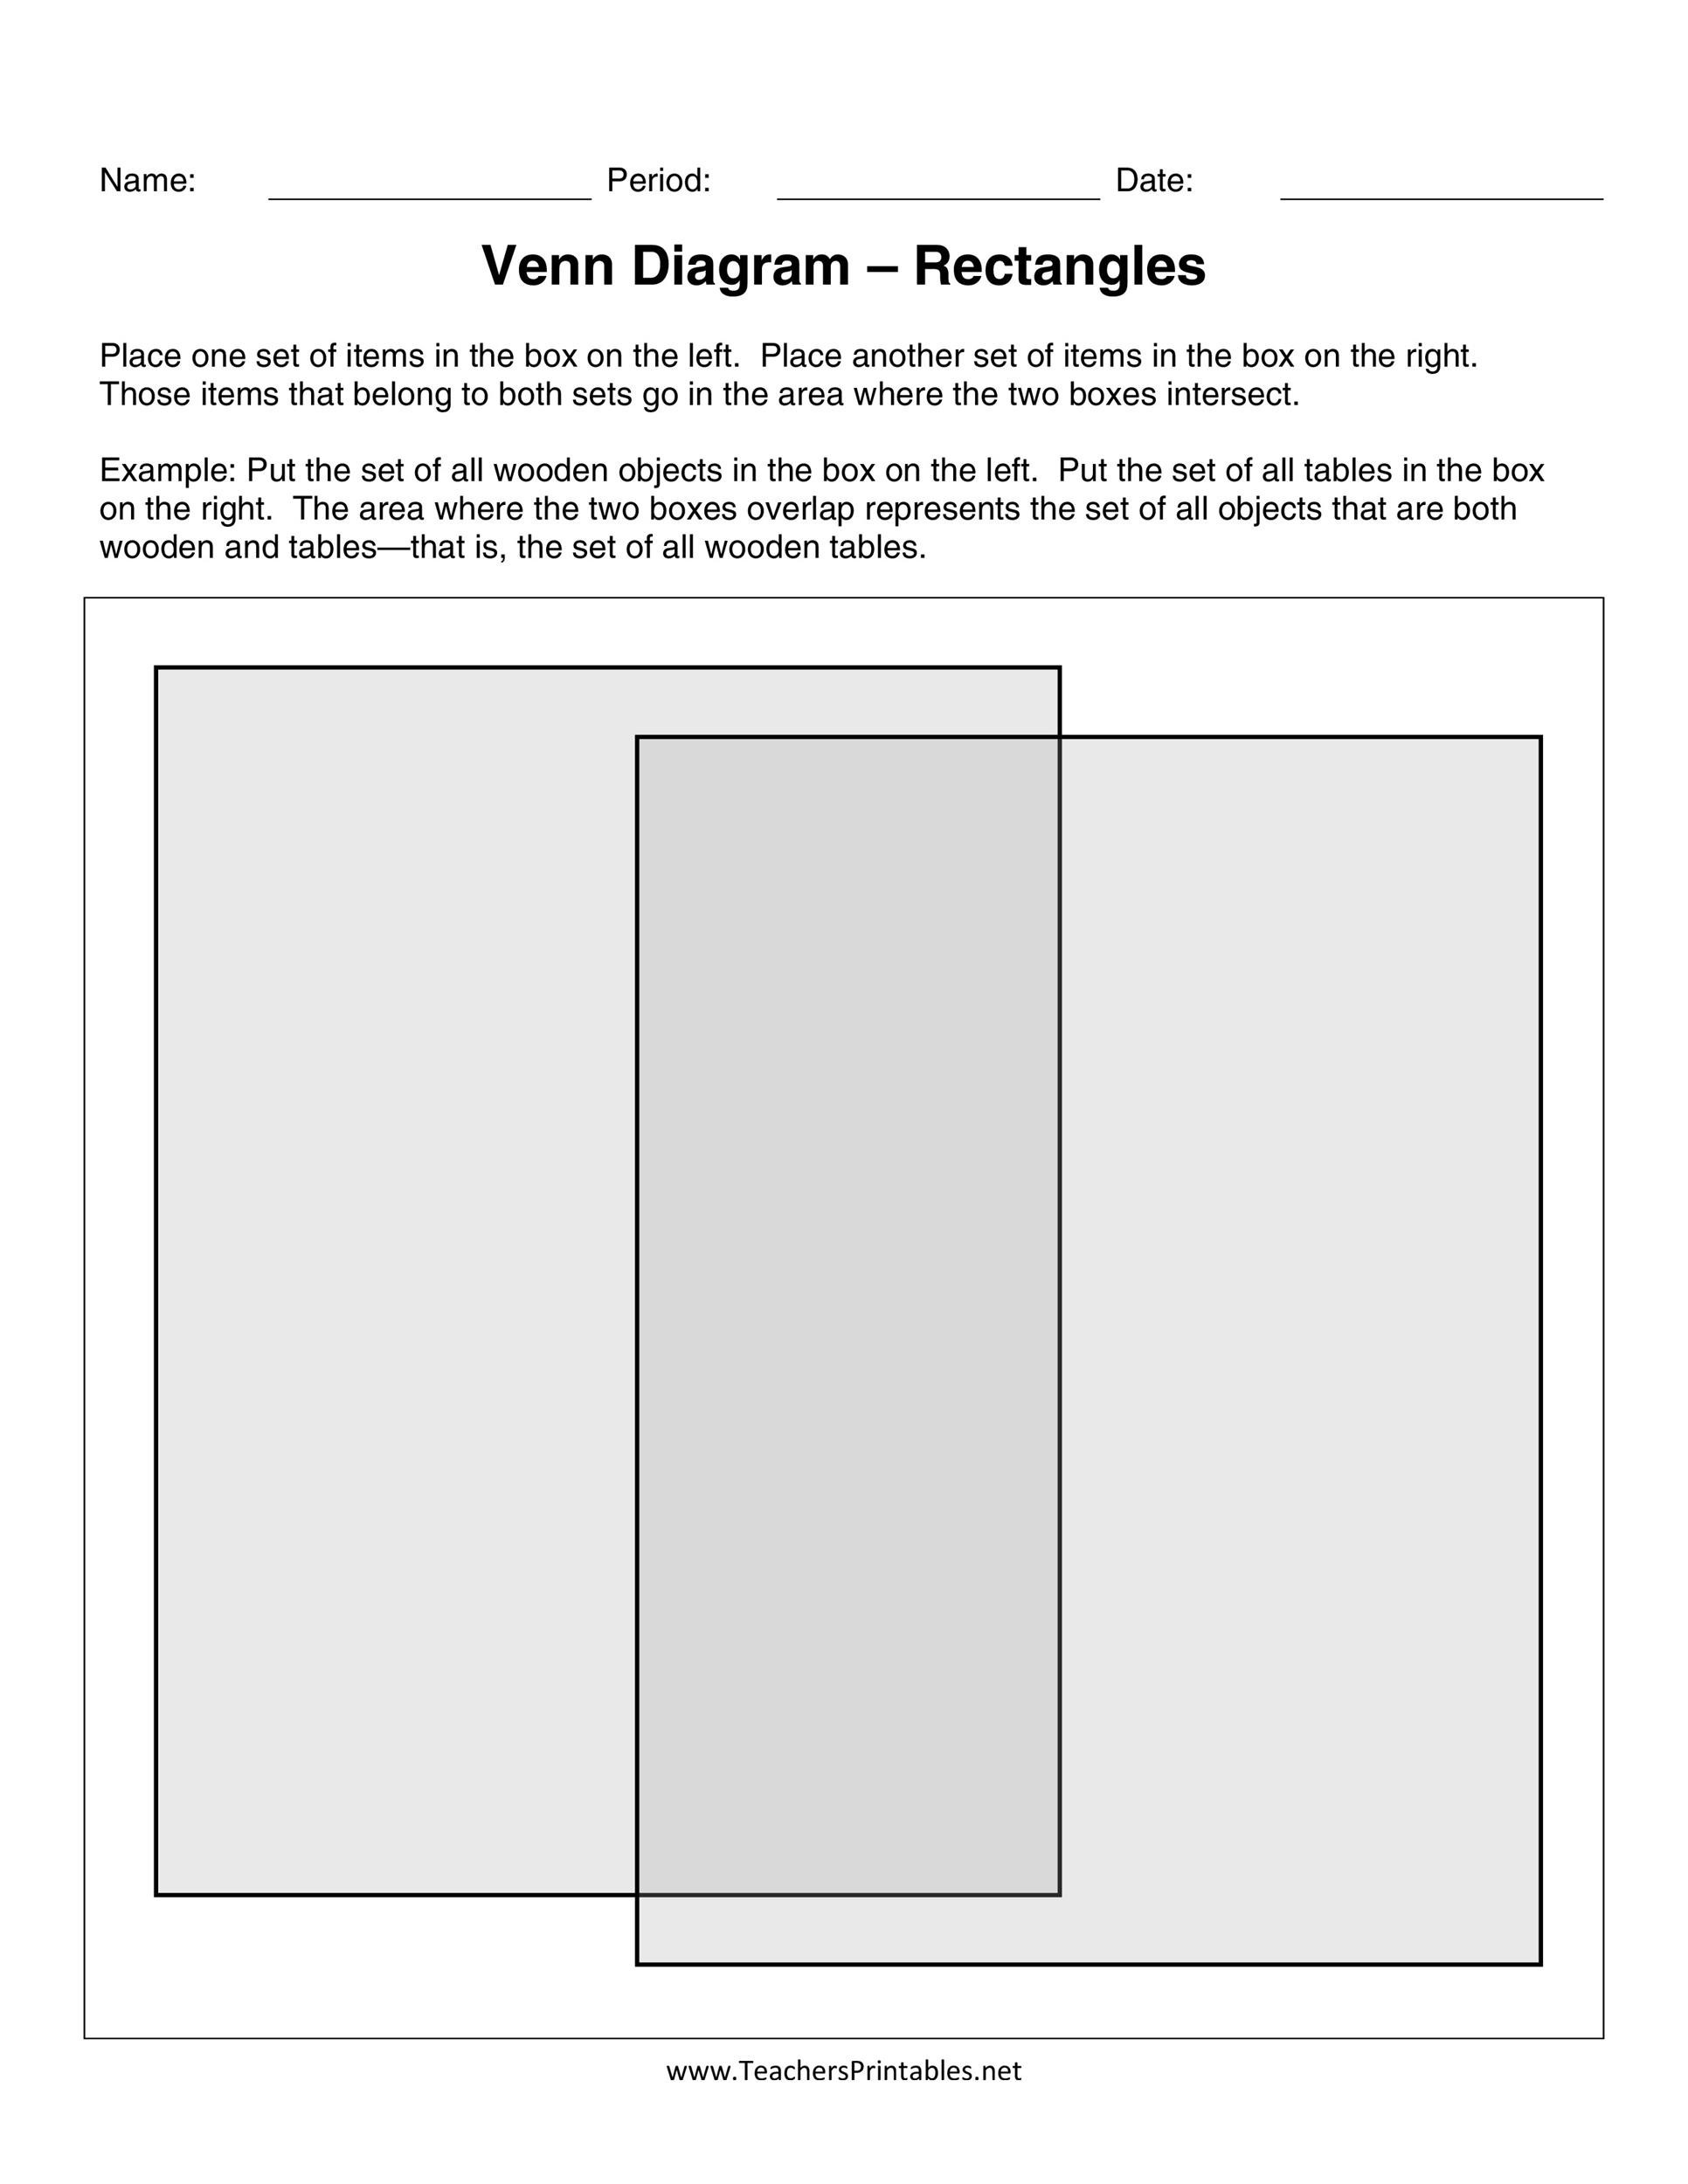 Venn Diagram Template Printable from templatelab.com